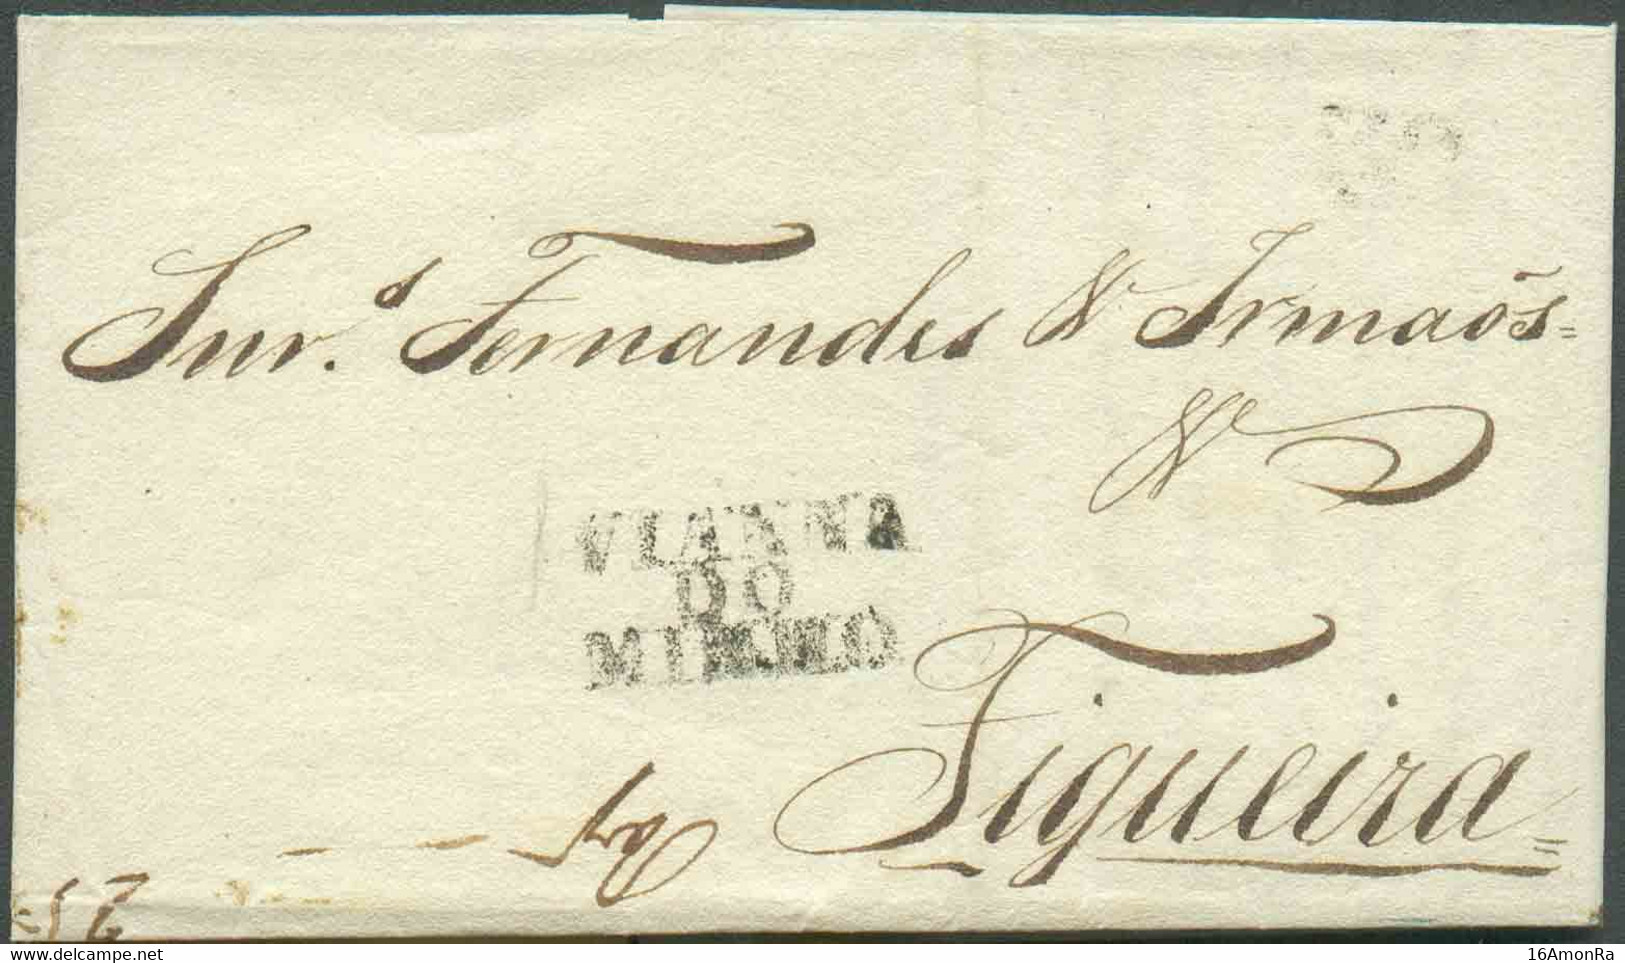 LAC De VIANNA DO MINNHO du 18 Octobre 1840 Vers Figueira. - TB - 18091 - ...-1853 Vorphilatelie